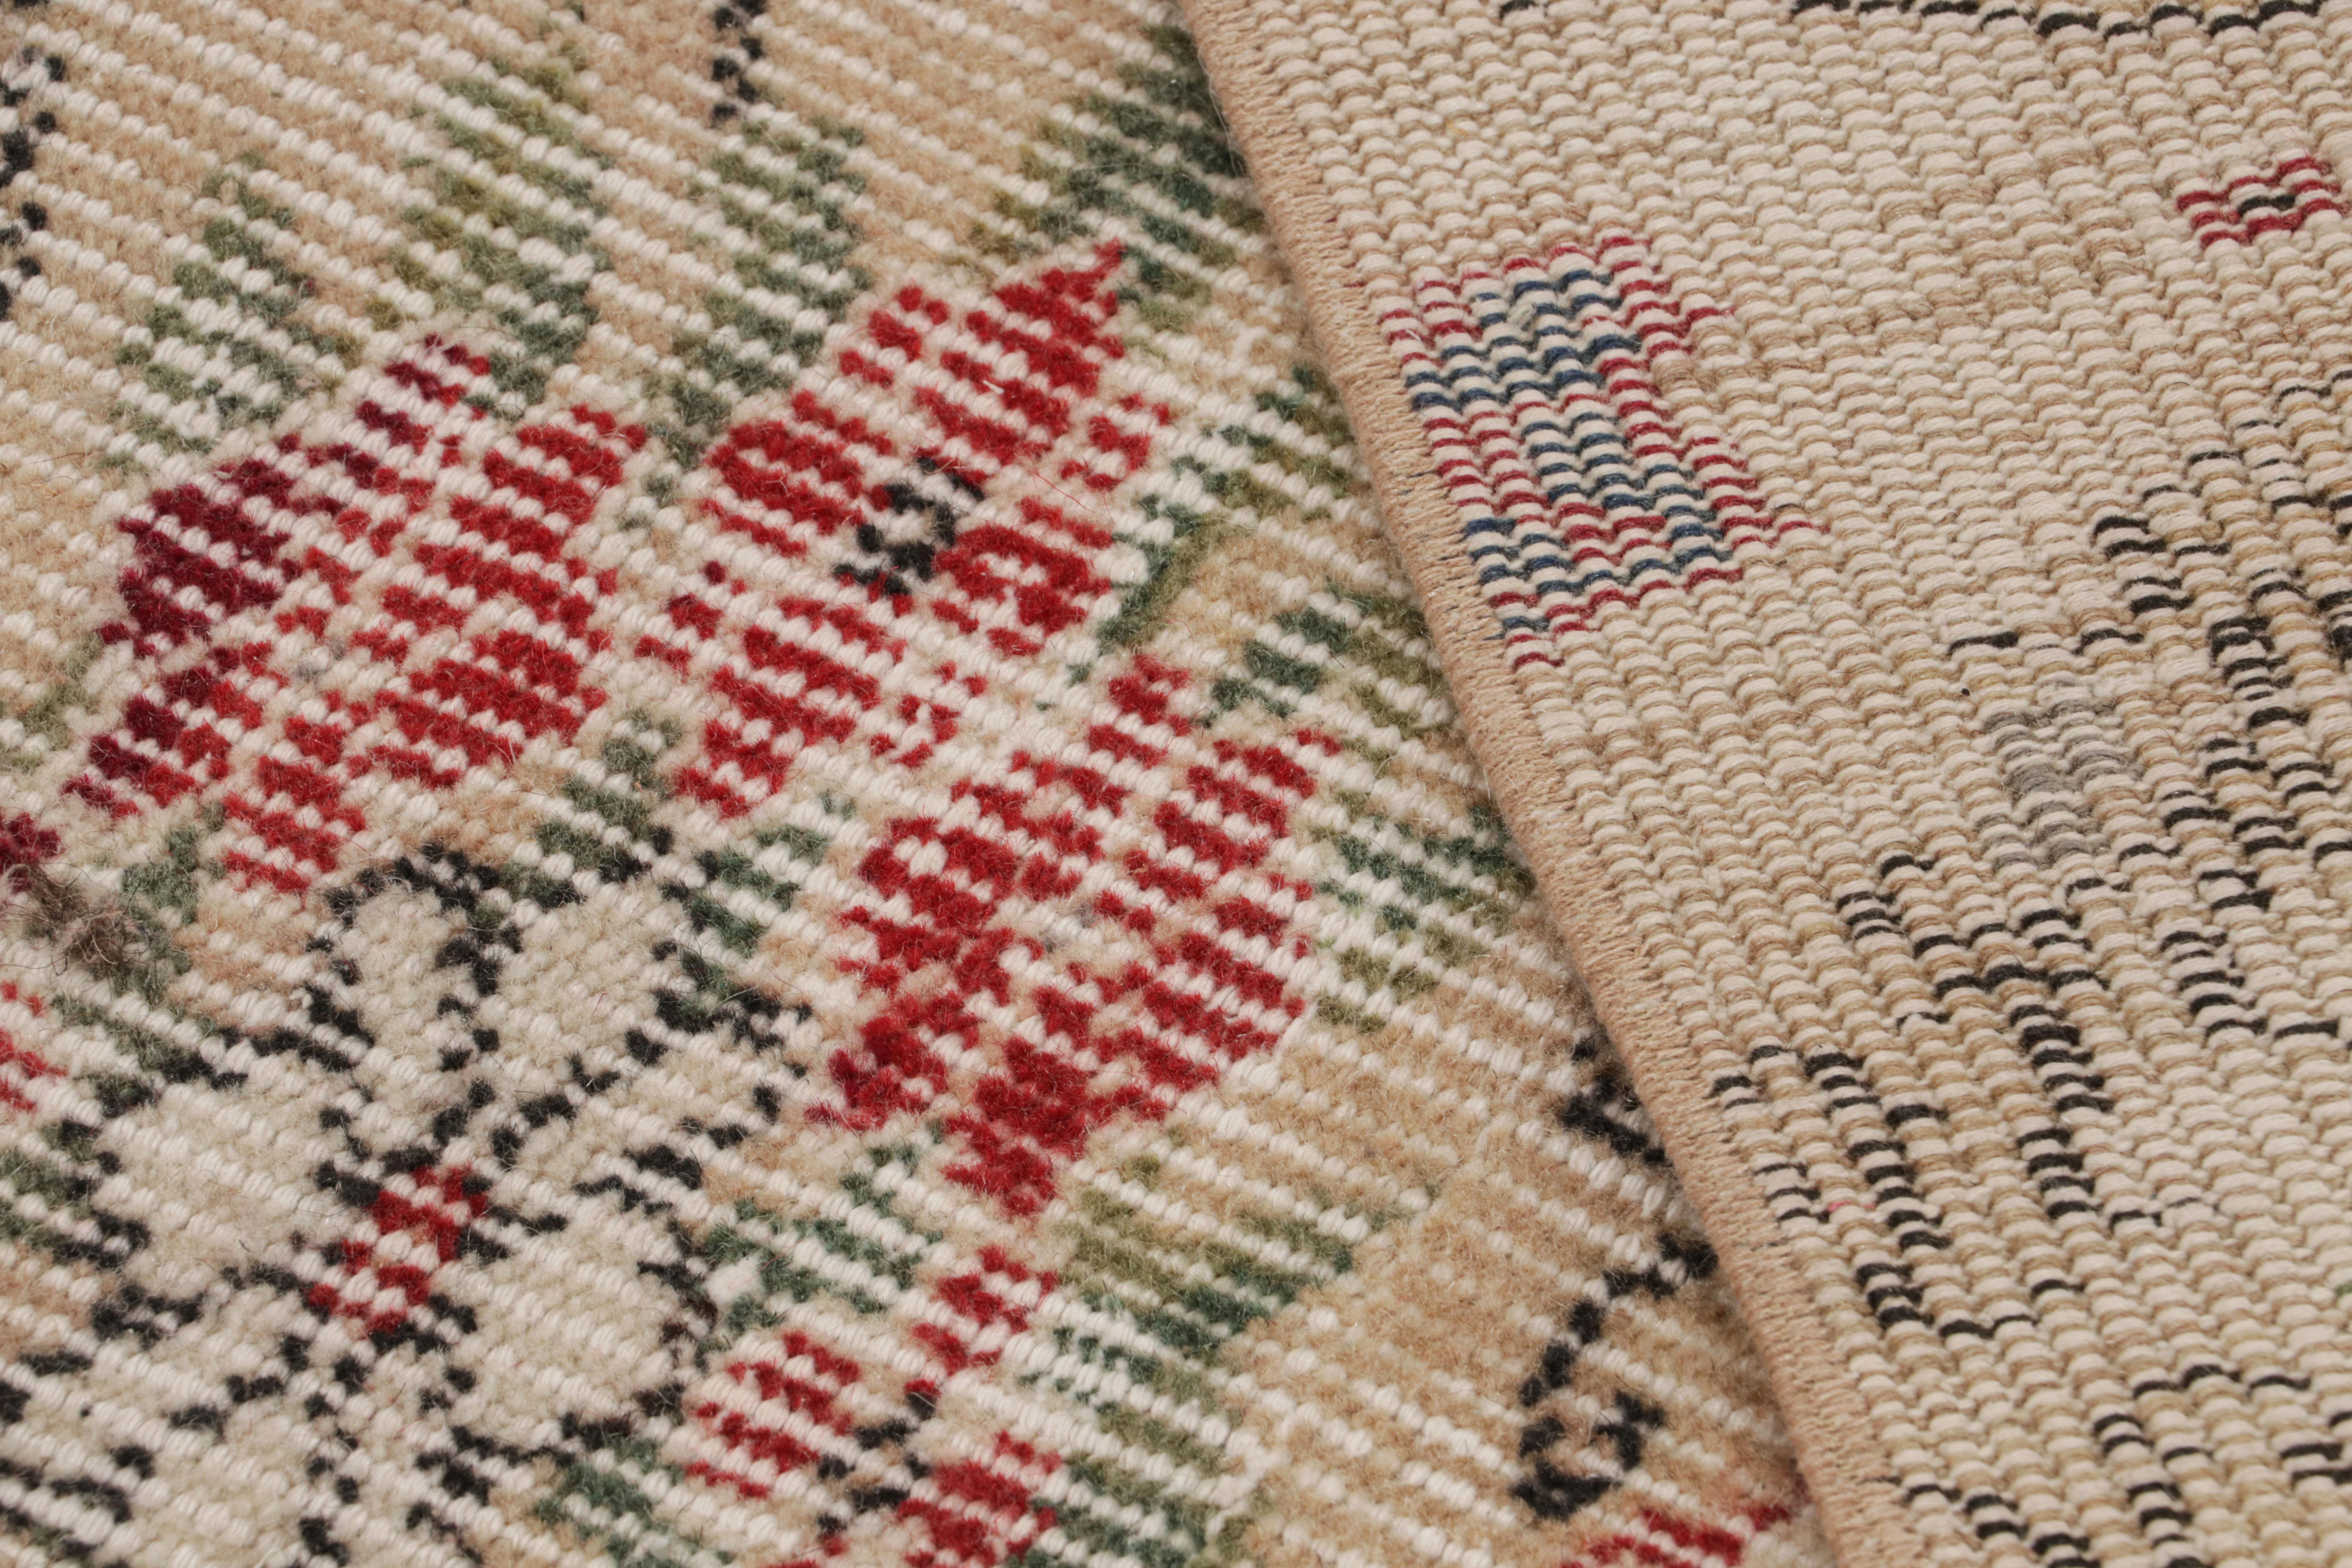 Wool Vintage Zeki Müren Rug in Beige, with Colorful Floral Patterns from Rug & Kilim For Sale